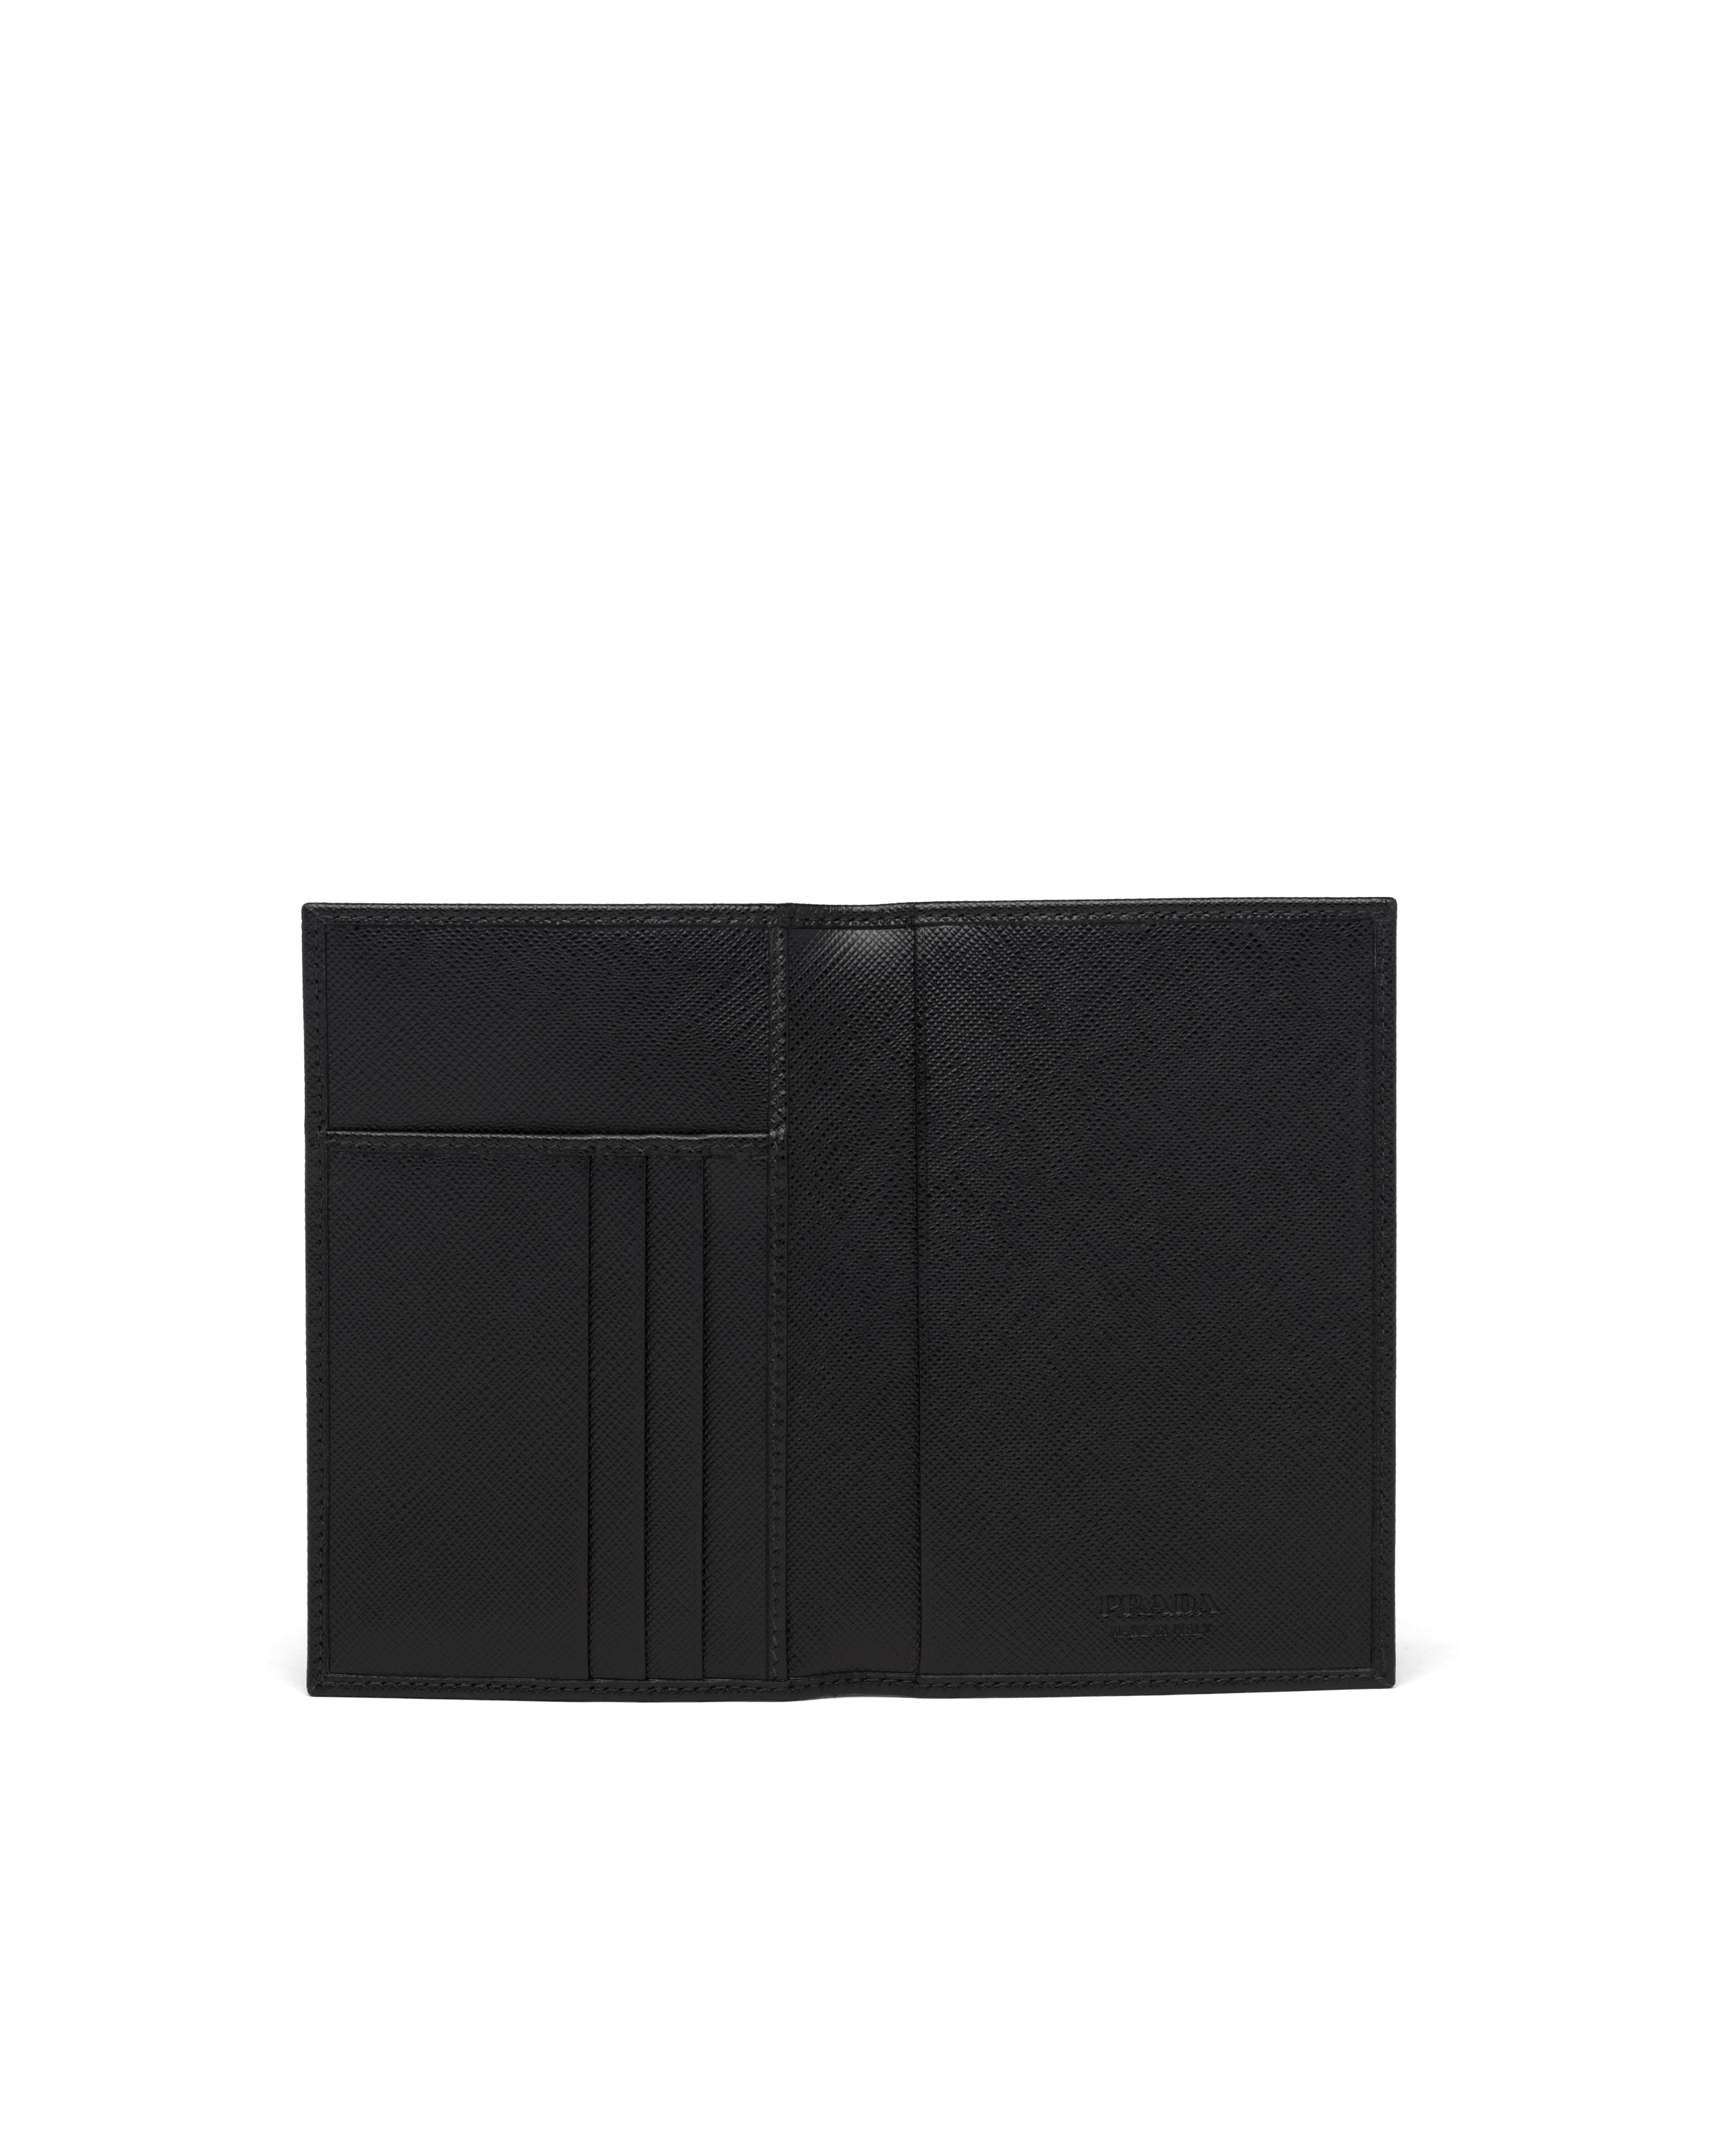 Saffiano leather passport holder - 4